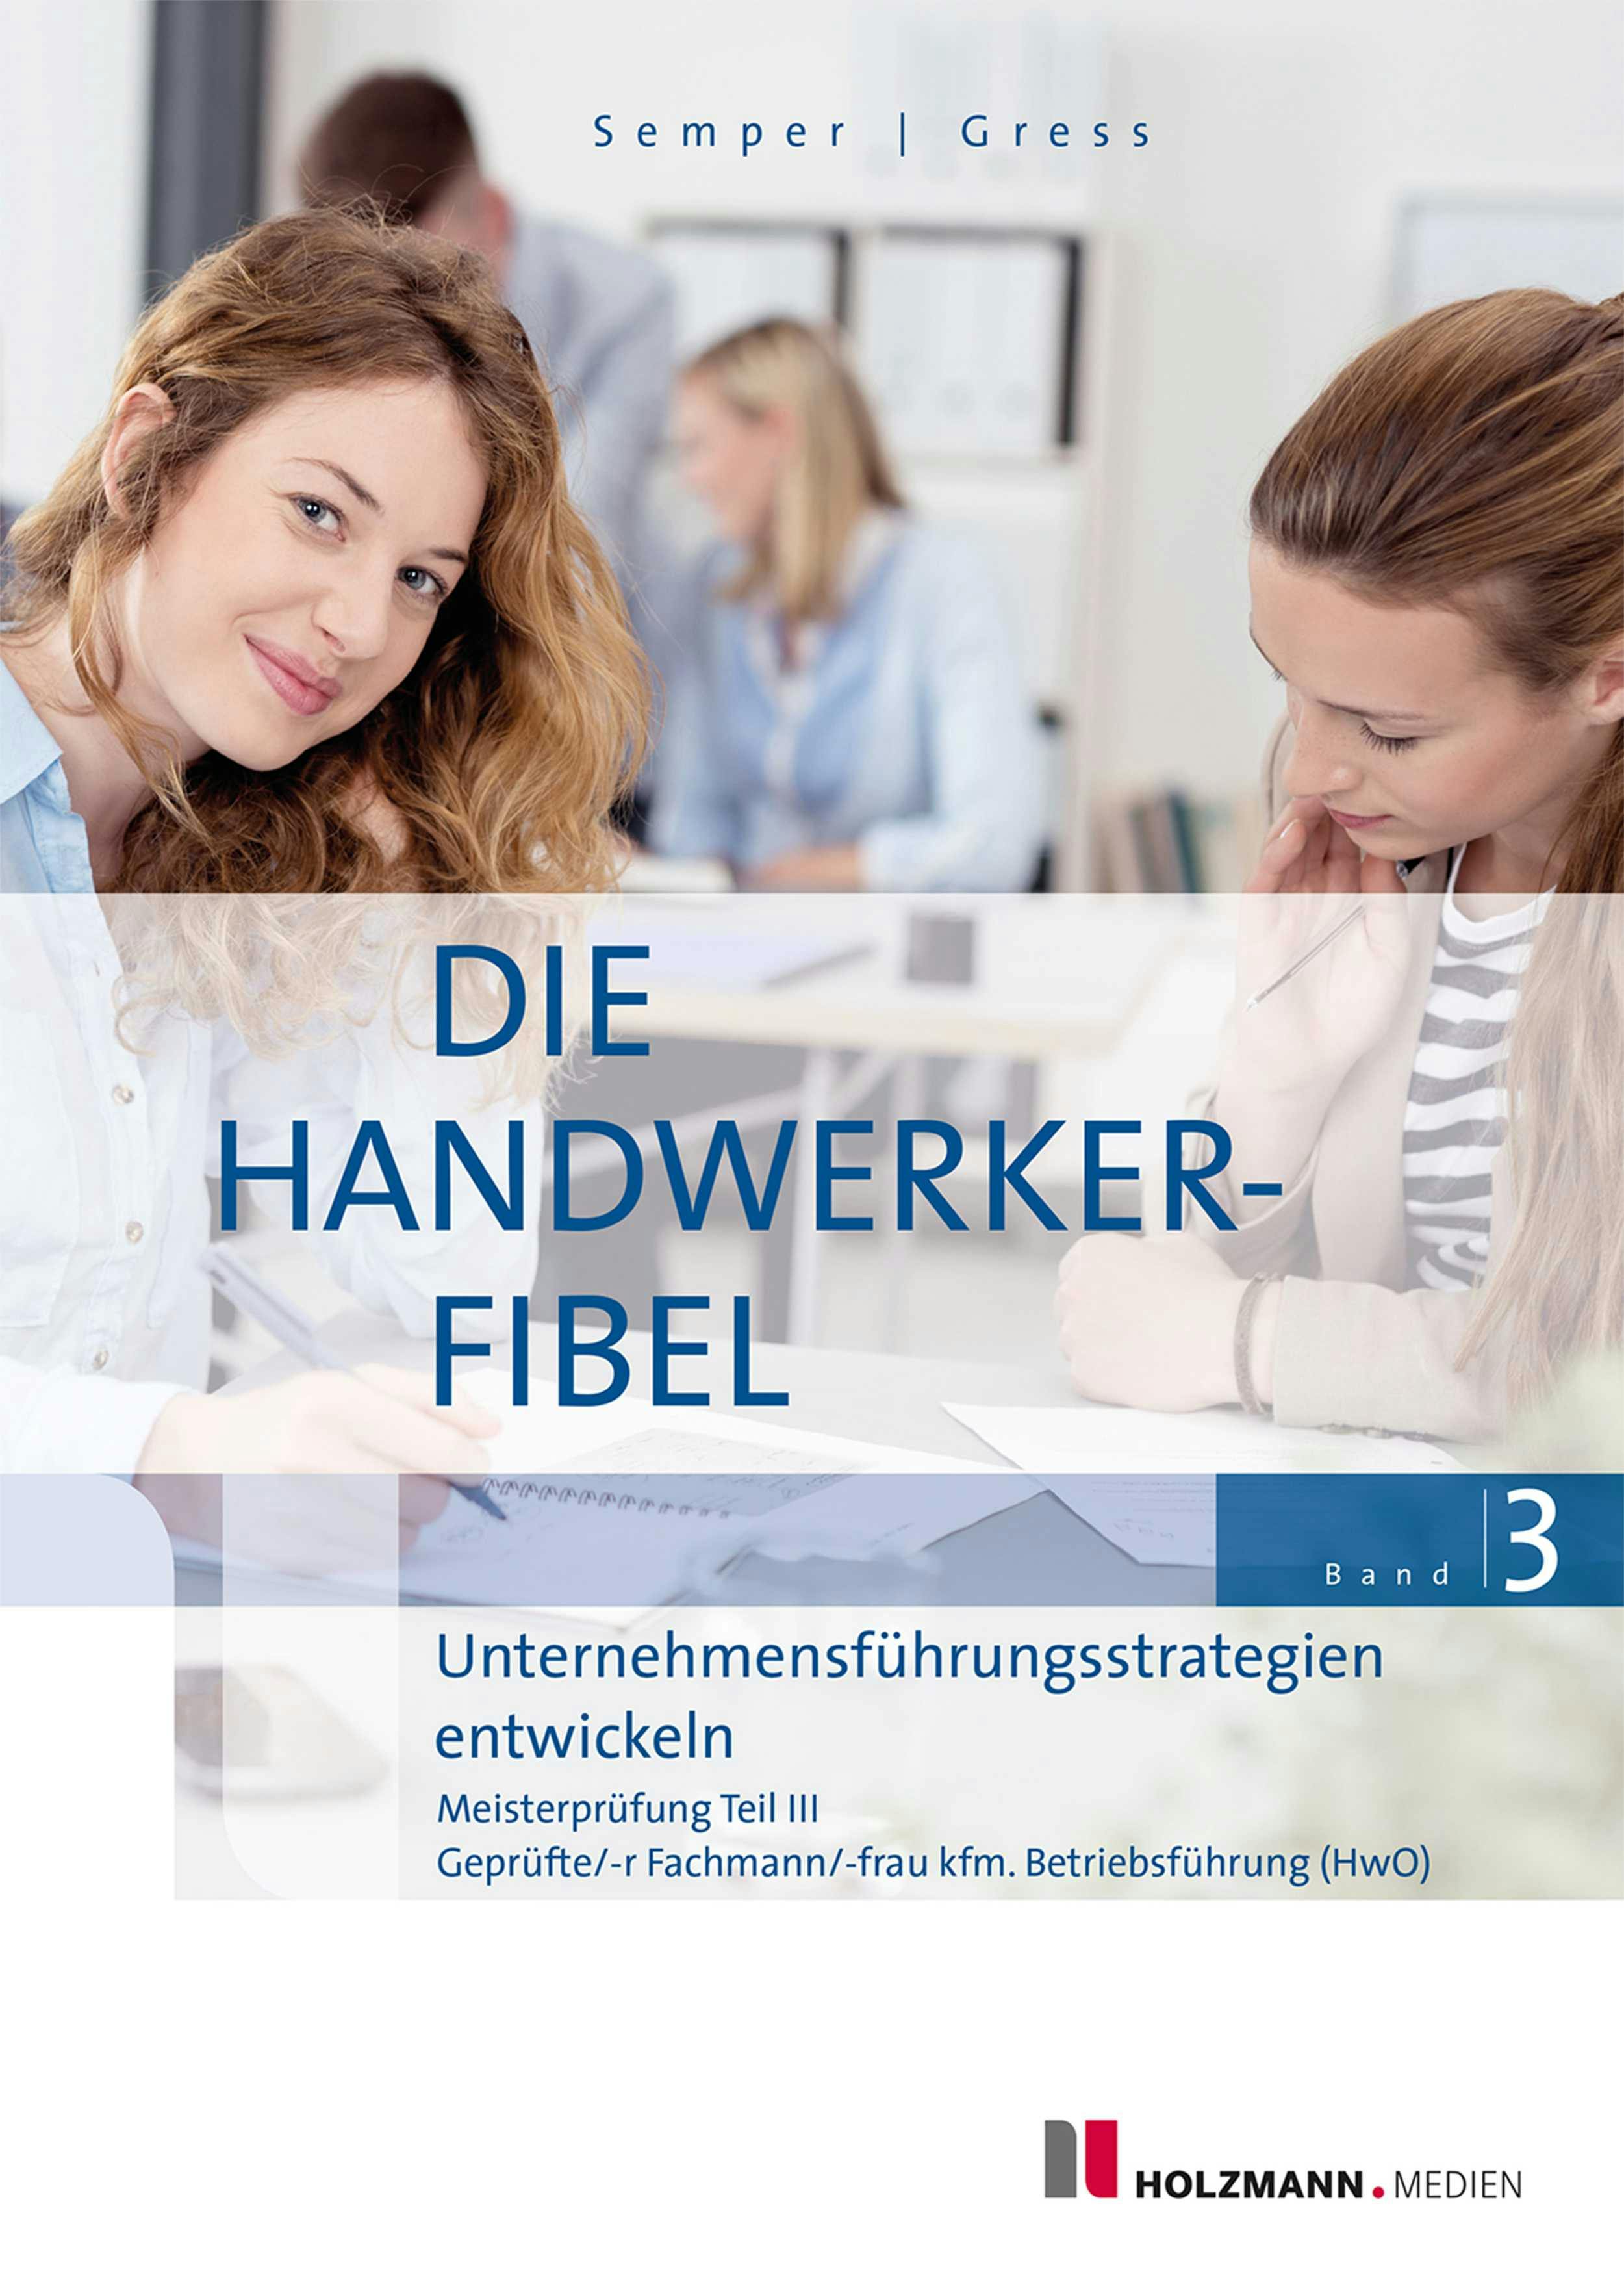 E-Book "Die Handwerker-Fibel" - Bernhard Gress, Dr. Lothar Semper